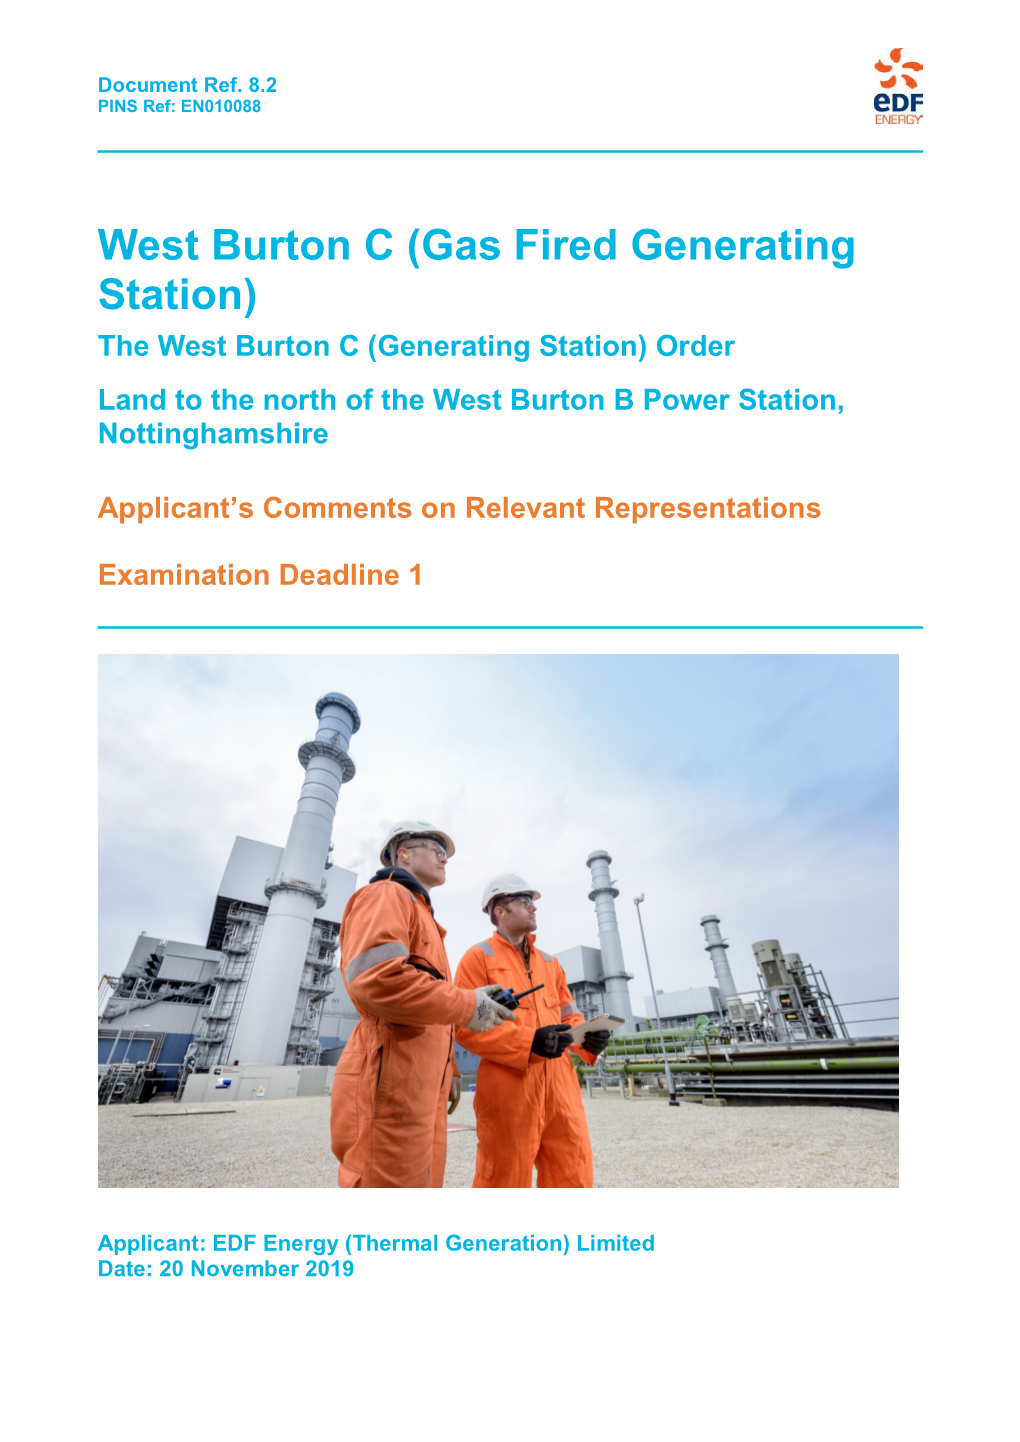 West Burton C (Gas Fired Generating Station)